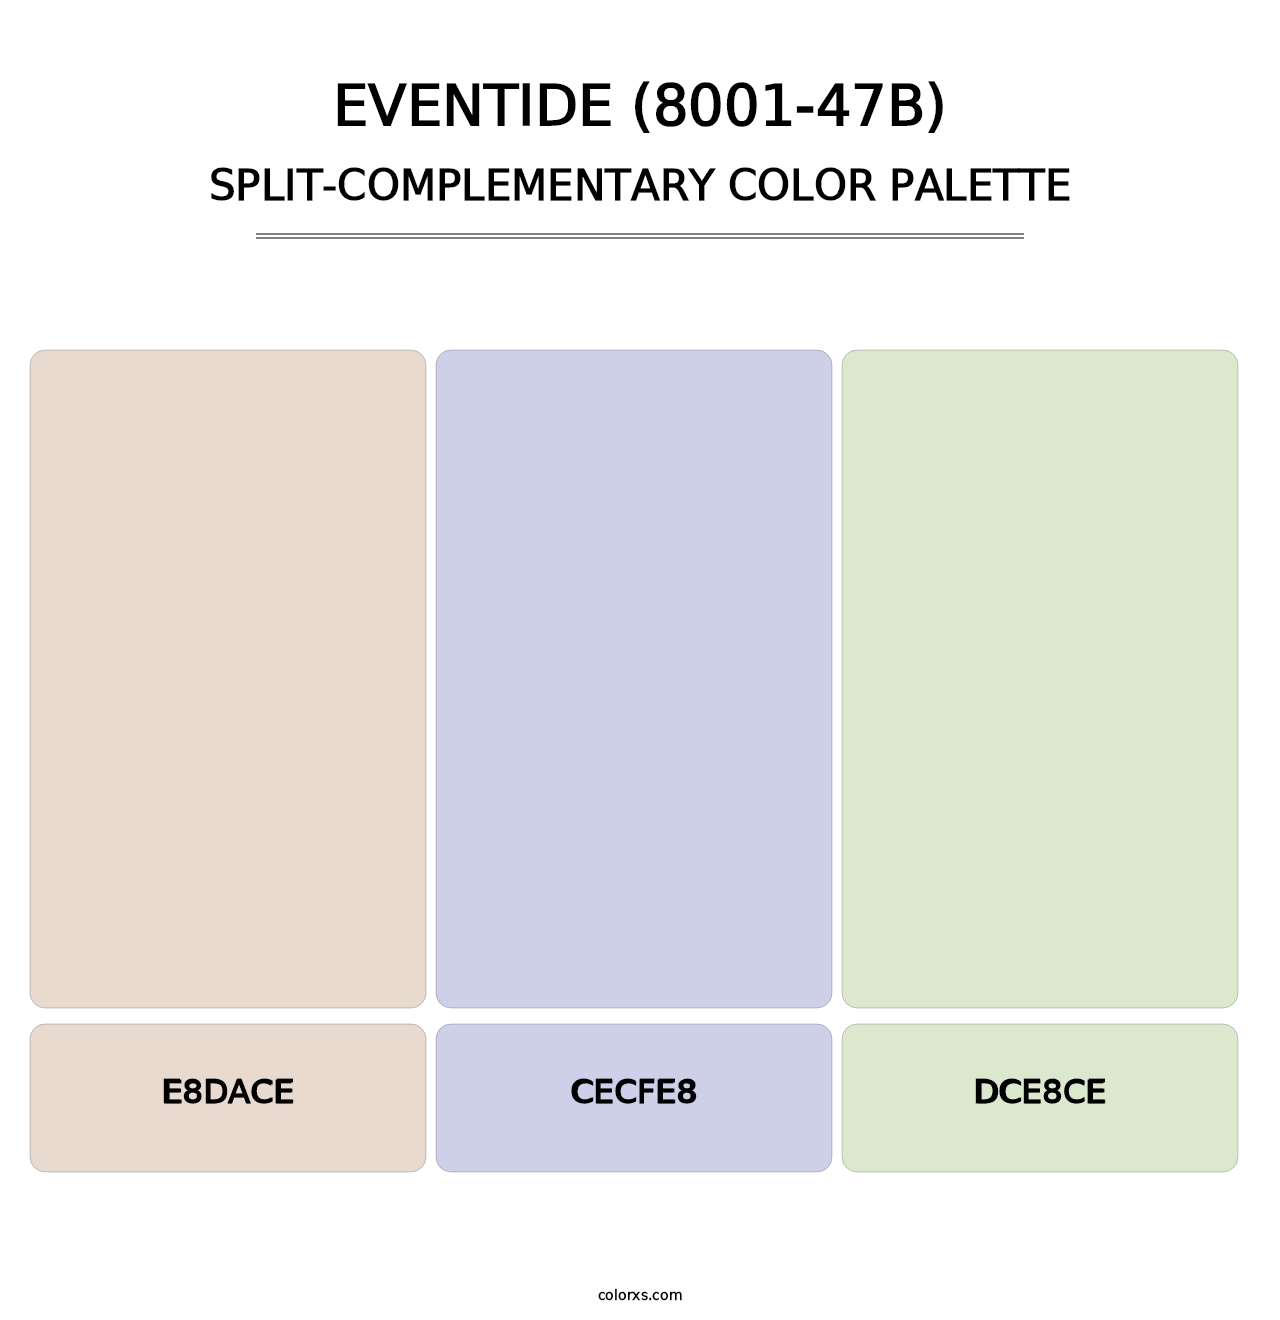 Eventide (8001-47B) - Split-Complementary Color Palette